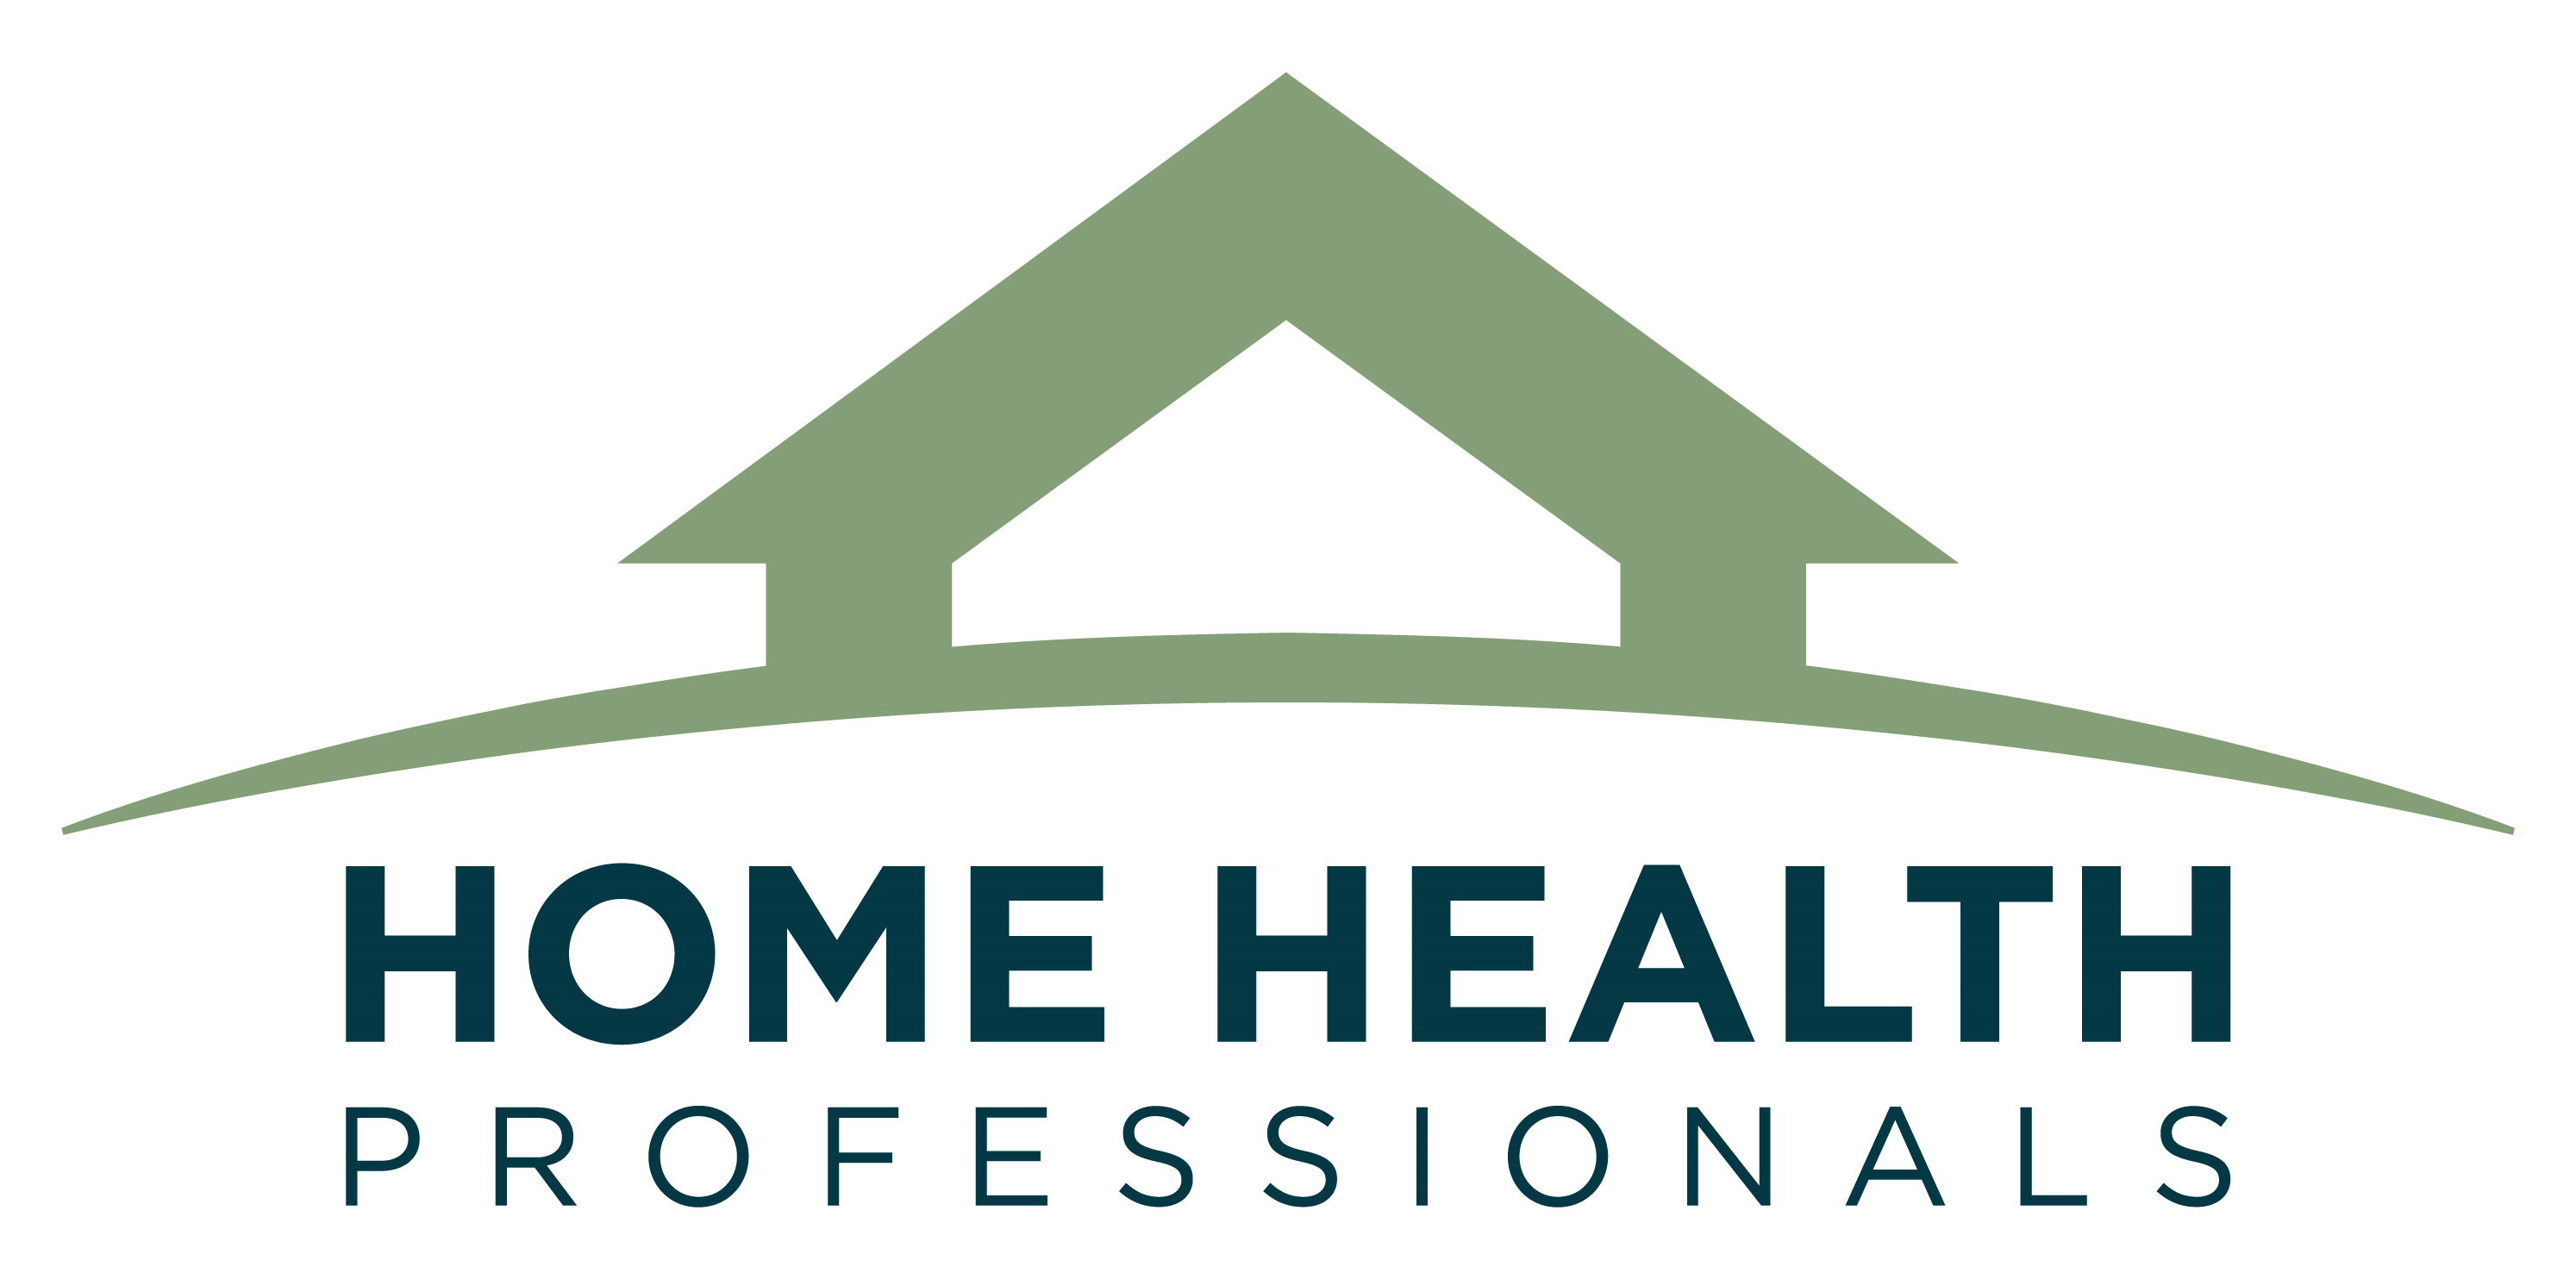 Home Health Professionals Company Logo